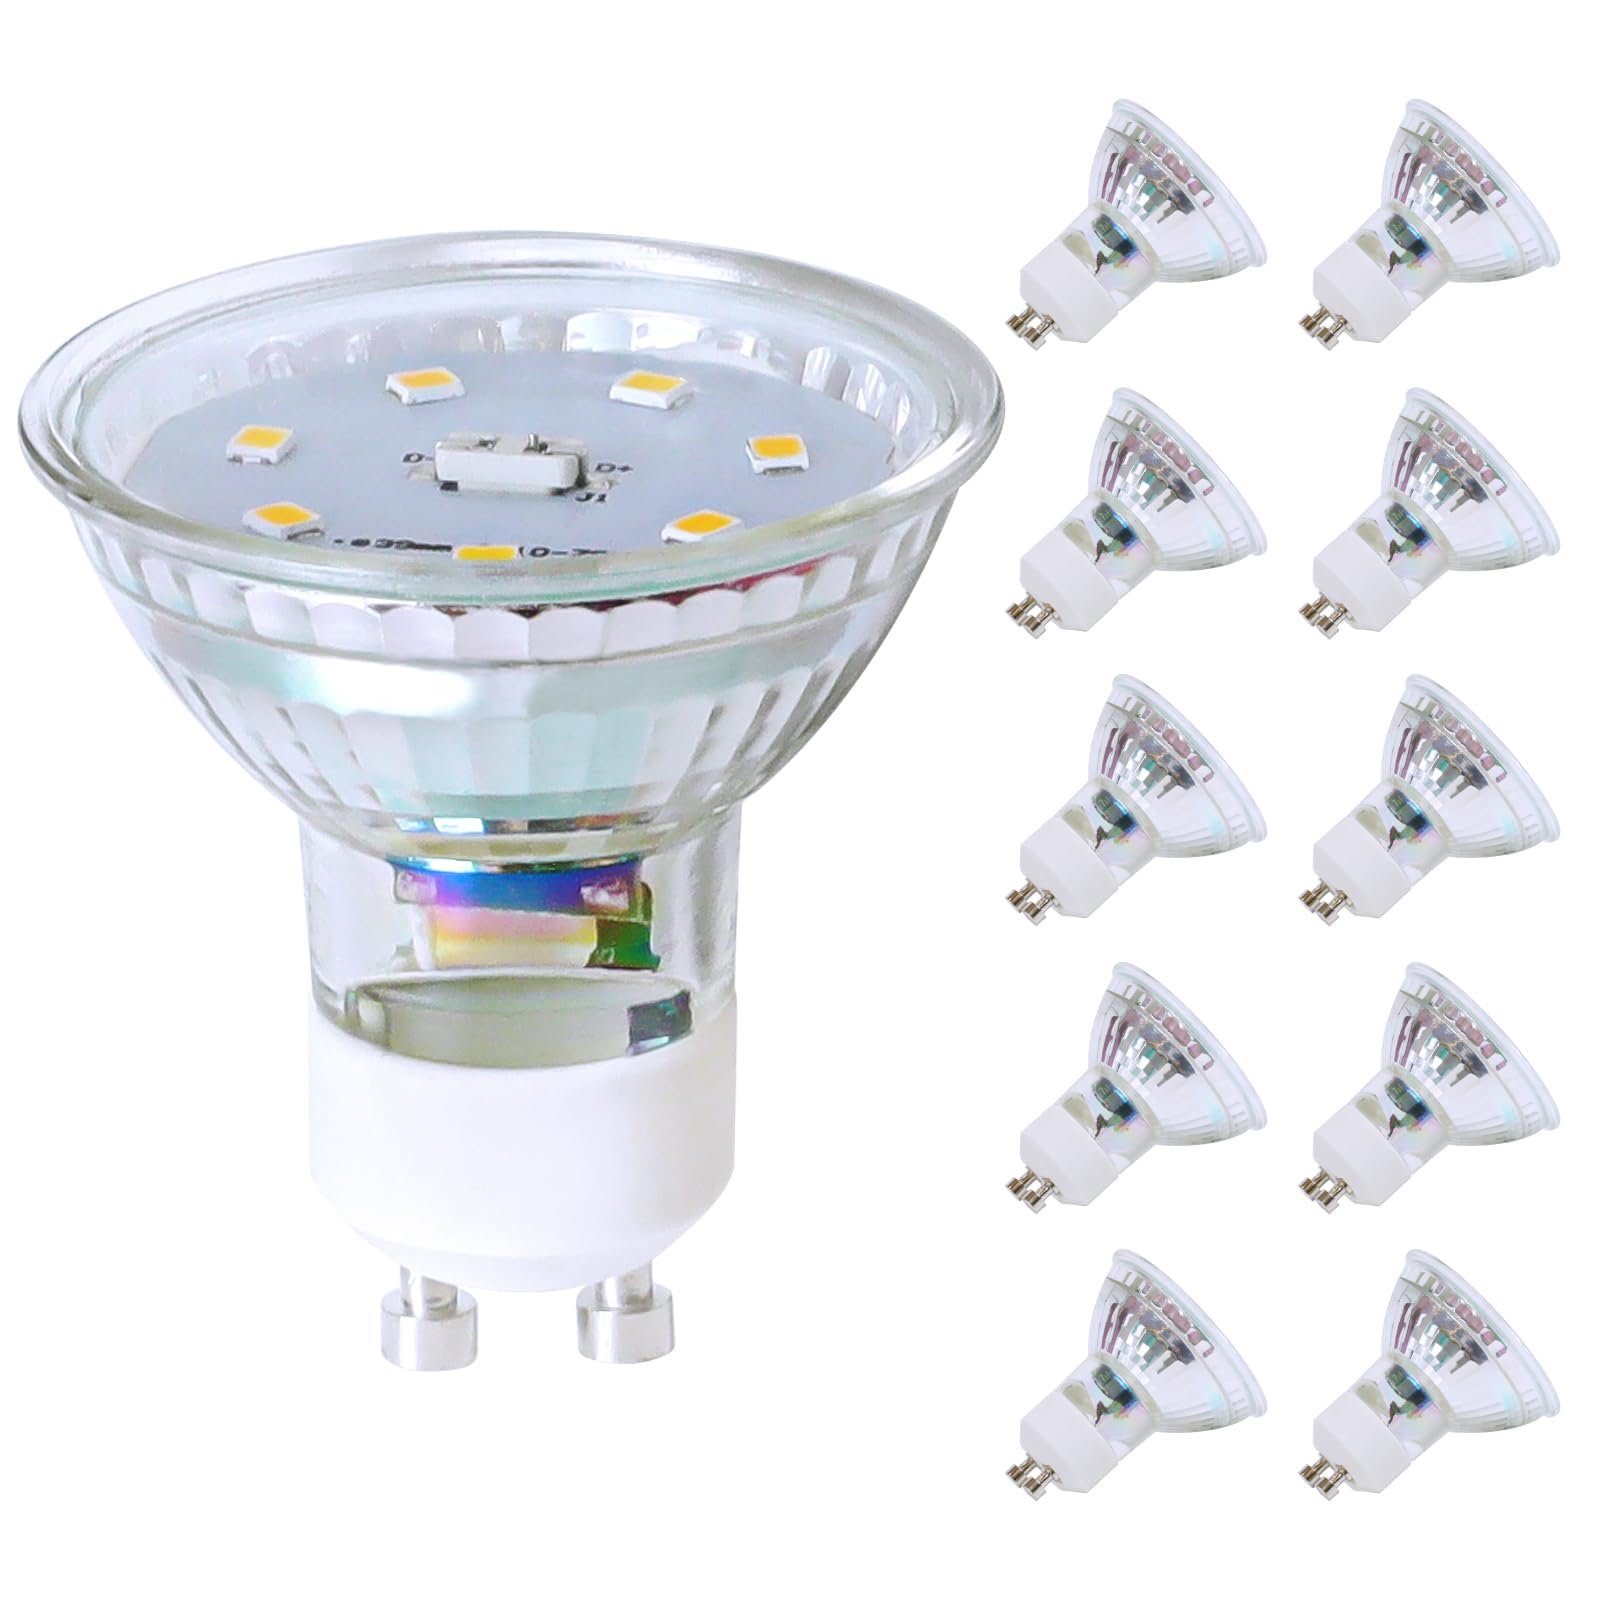 ZMH LED-Leuchtmittel 5W Energiesparlampe Abstrahlwinkel 110° Spot Reflektor Birne, GU10, 10 St., Warmweiß, 3000K